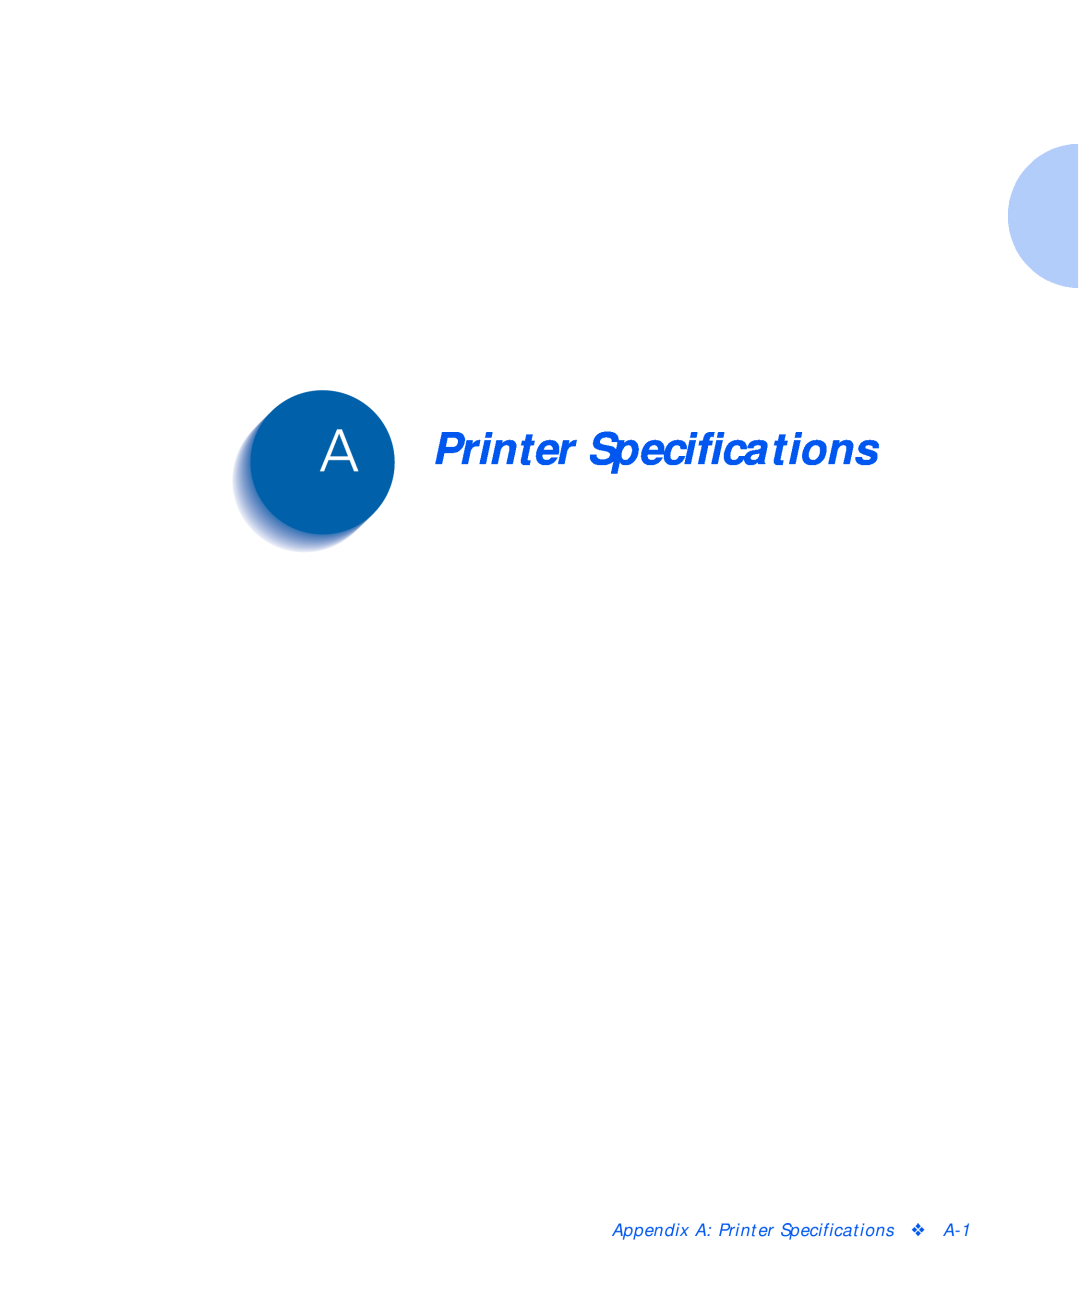 Xerox NC20 manual Appendix A Printer Specifications A-1 